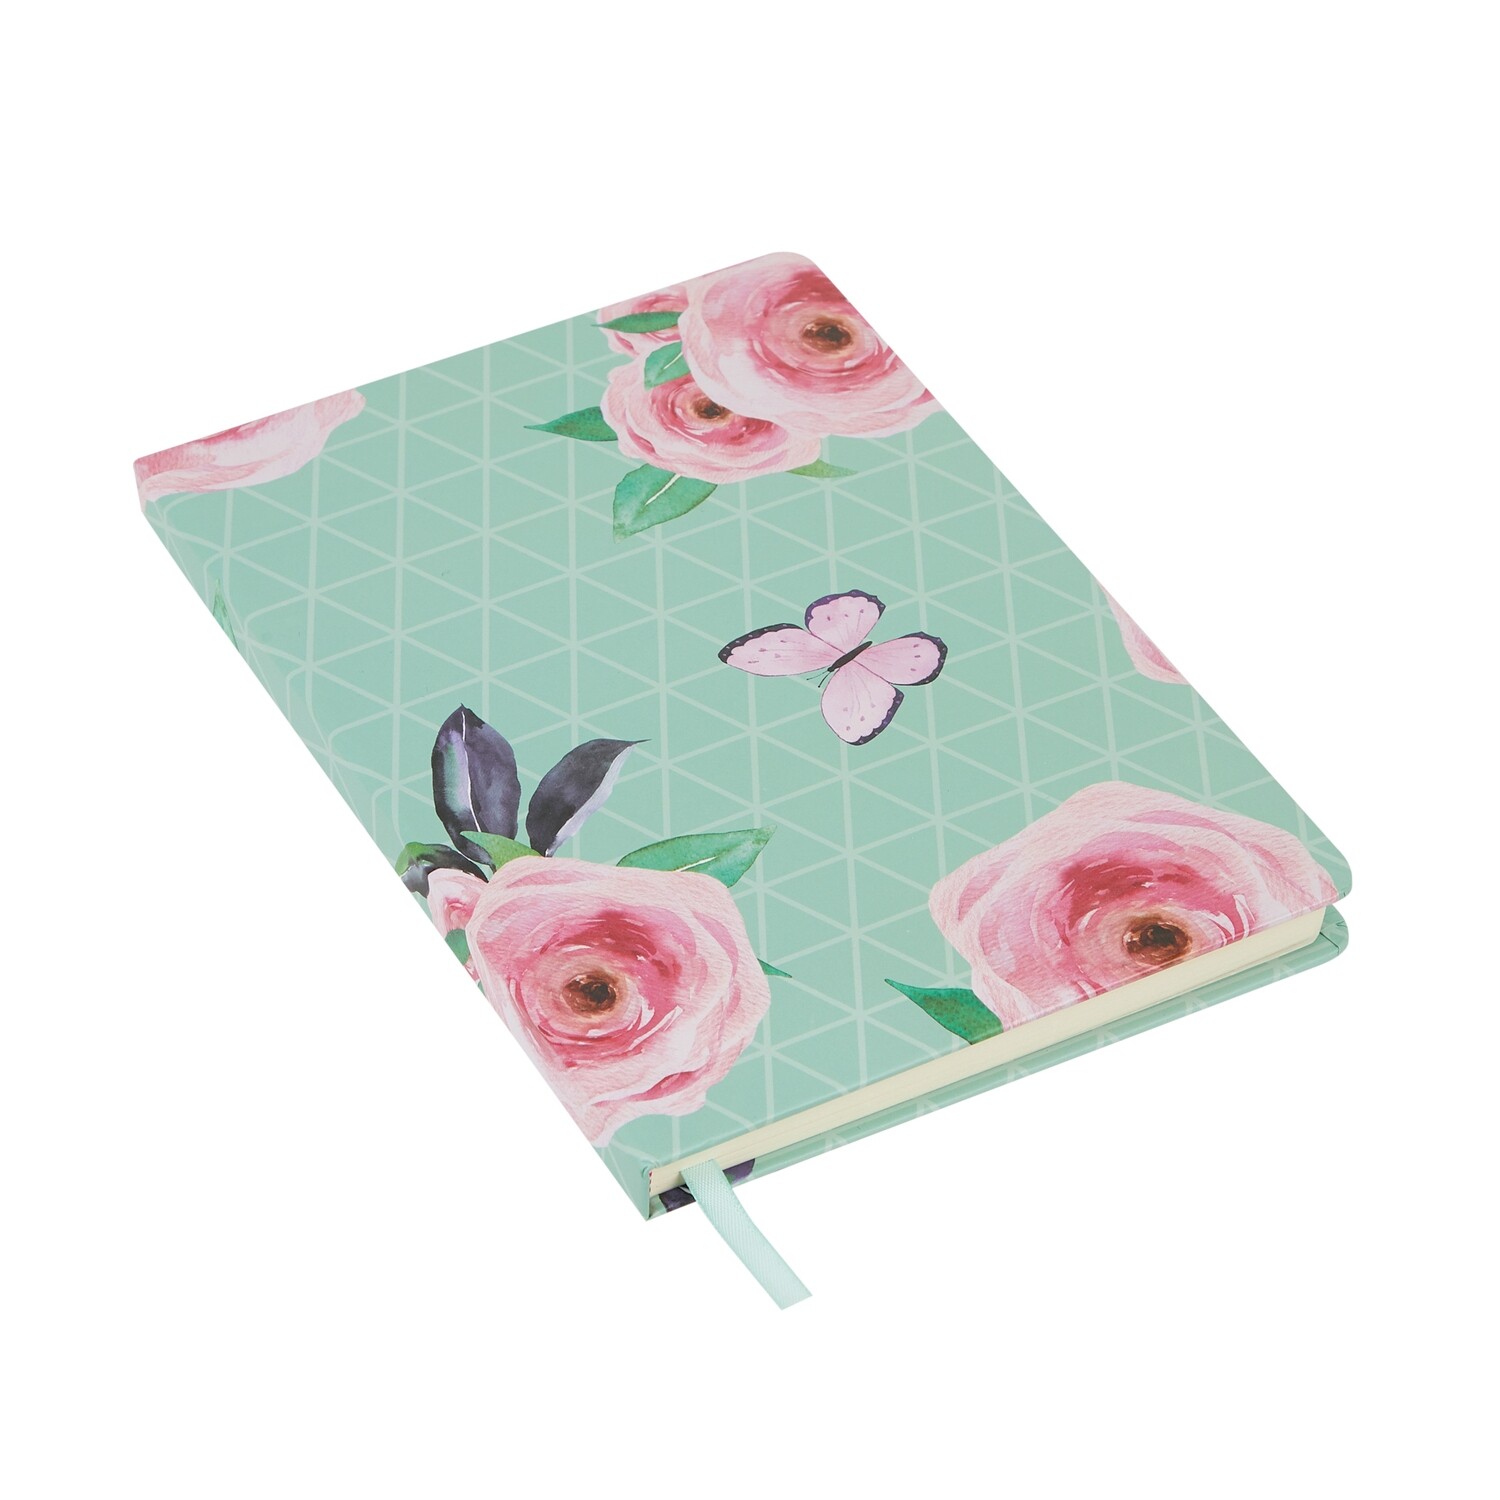 Candy - Hardbound Lined Journal A5 Notebook